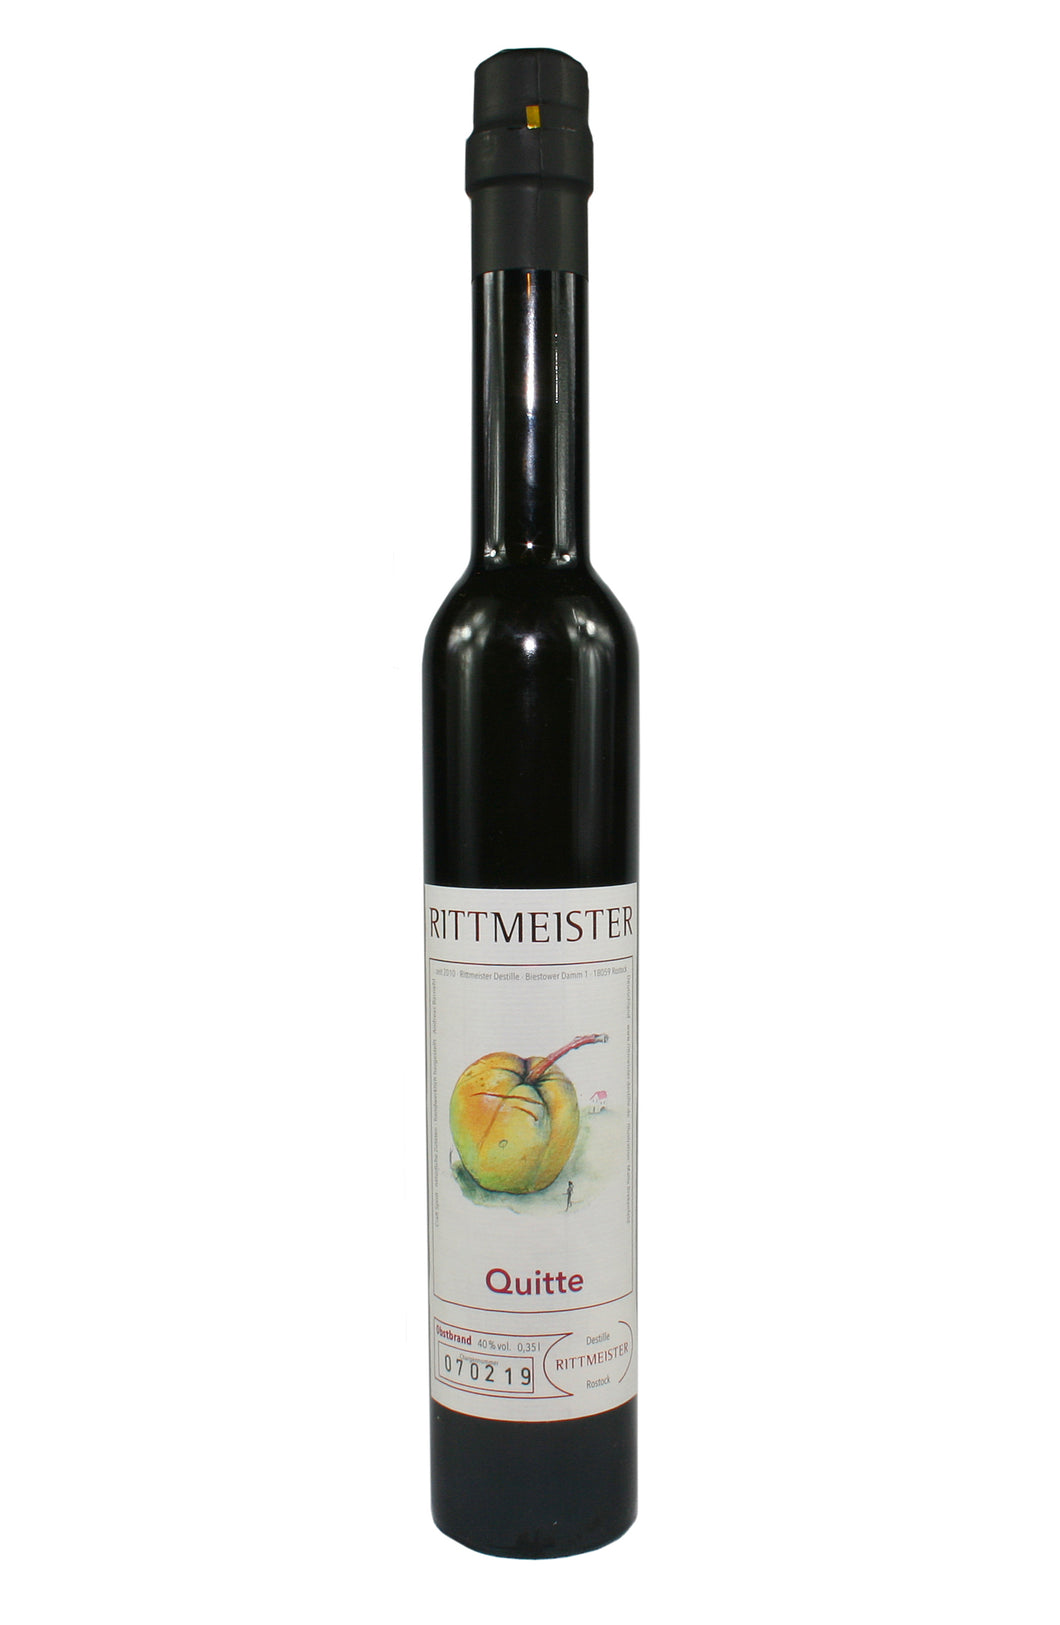 Rittmeister - Quitte (40% Vol.) / Brand